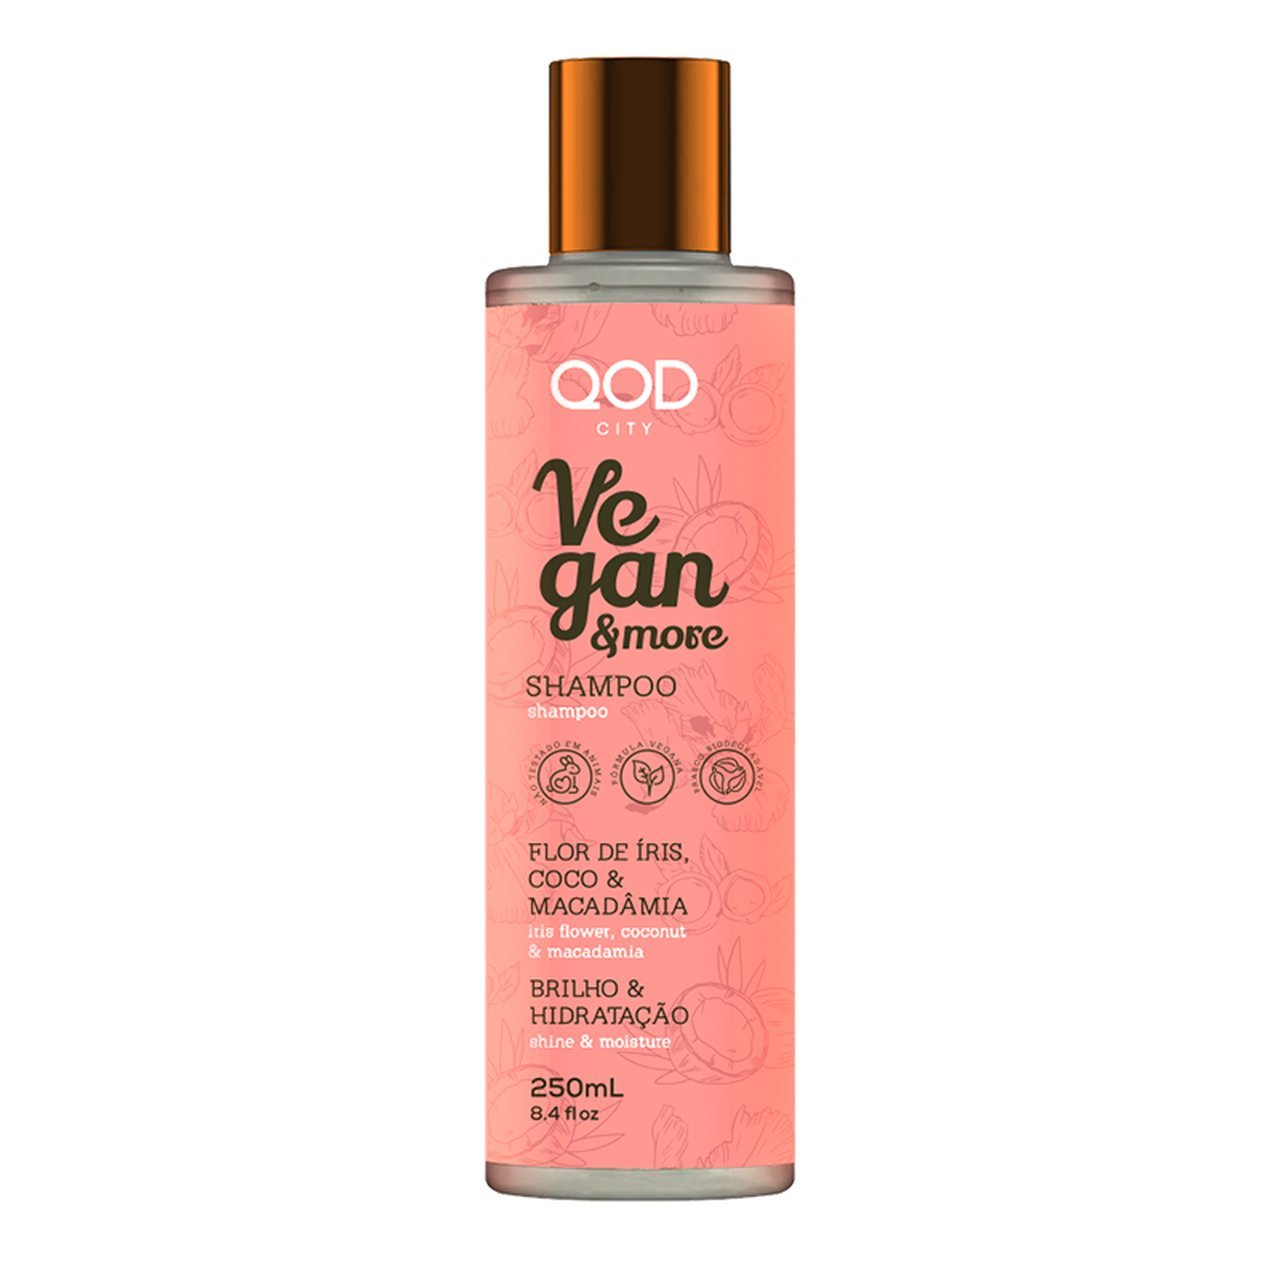 QOD Hair Care Vegan & More Shampoo 250ML - QOD